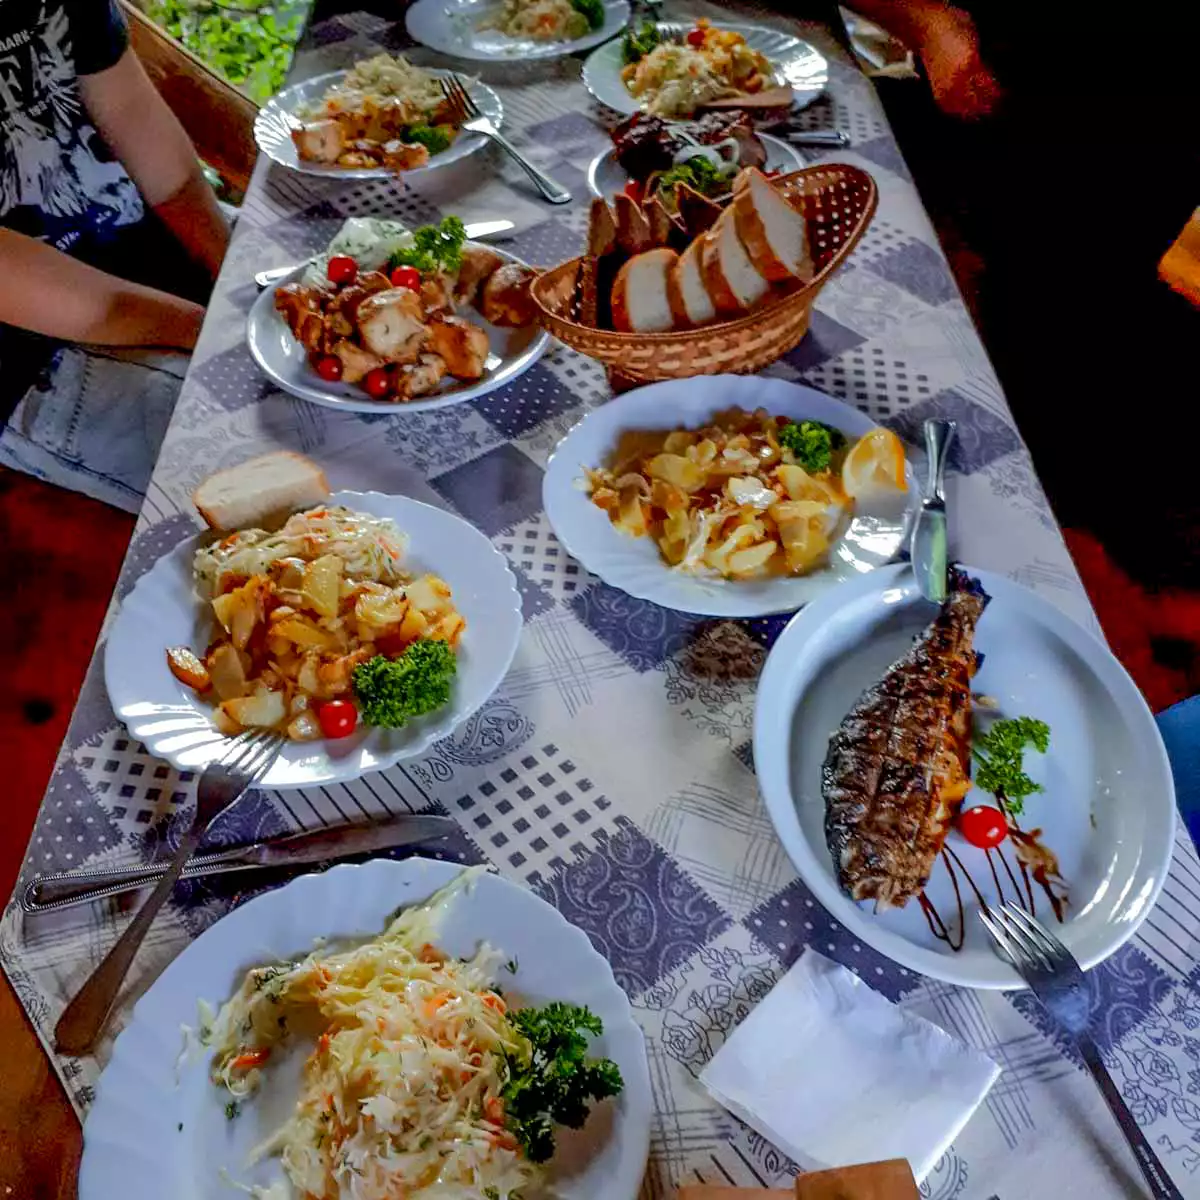 Davir-kolyba restaurant in Lumshory